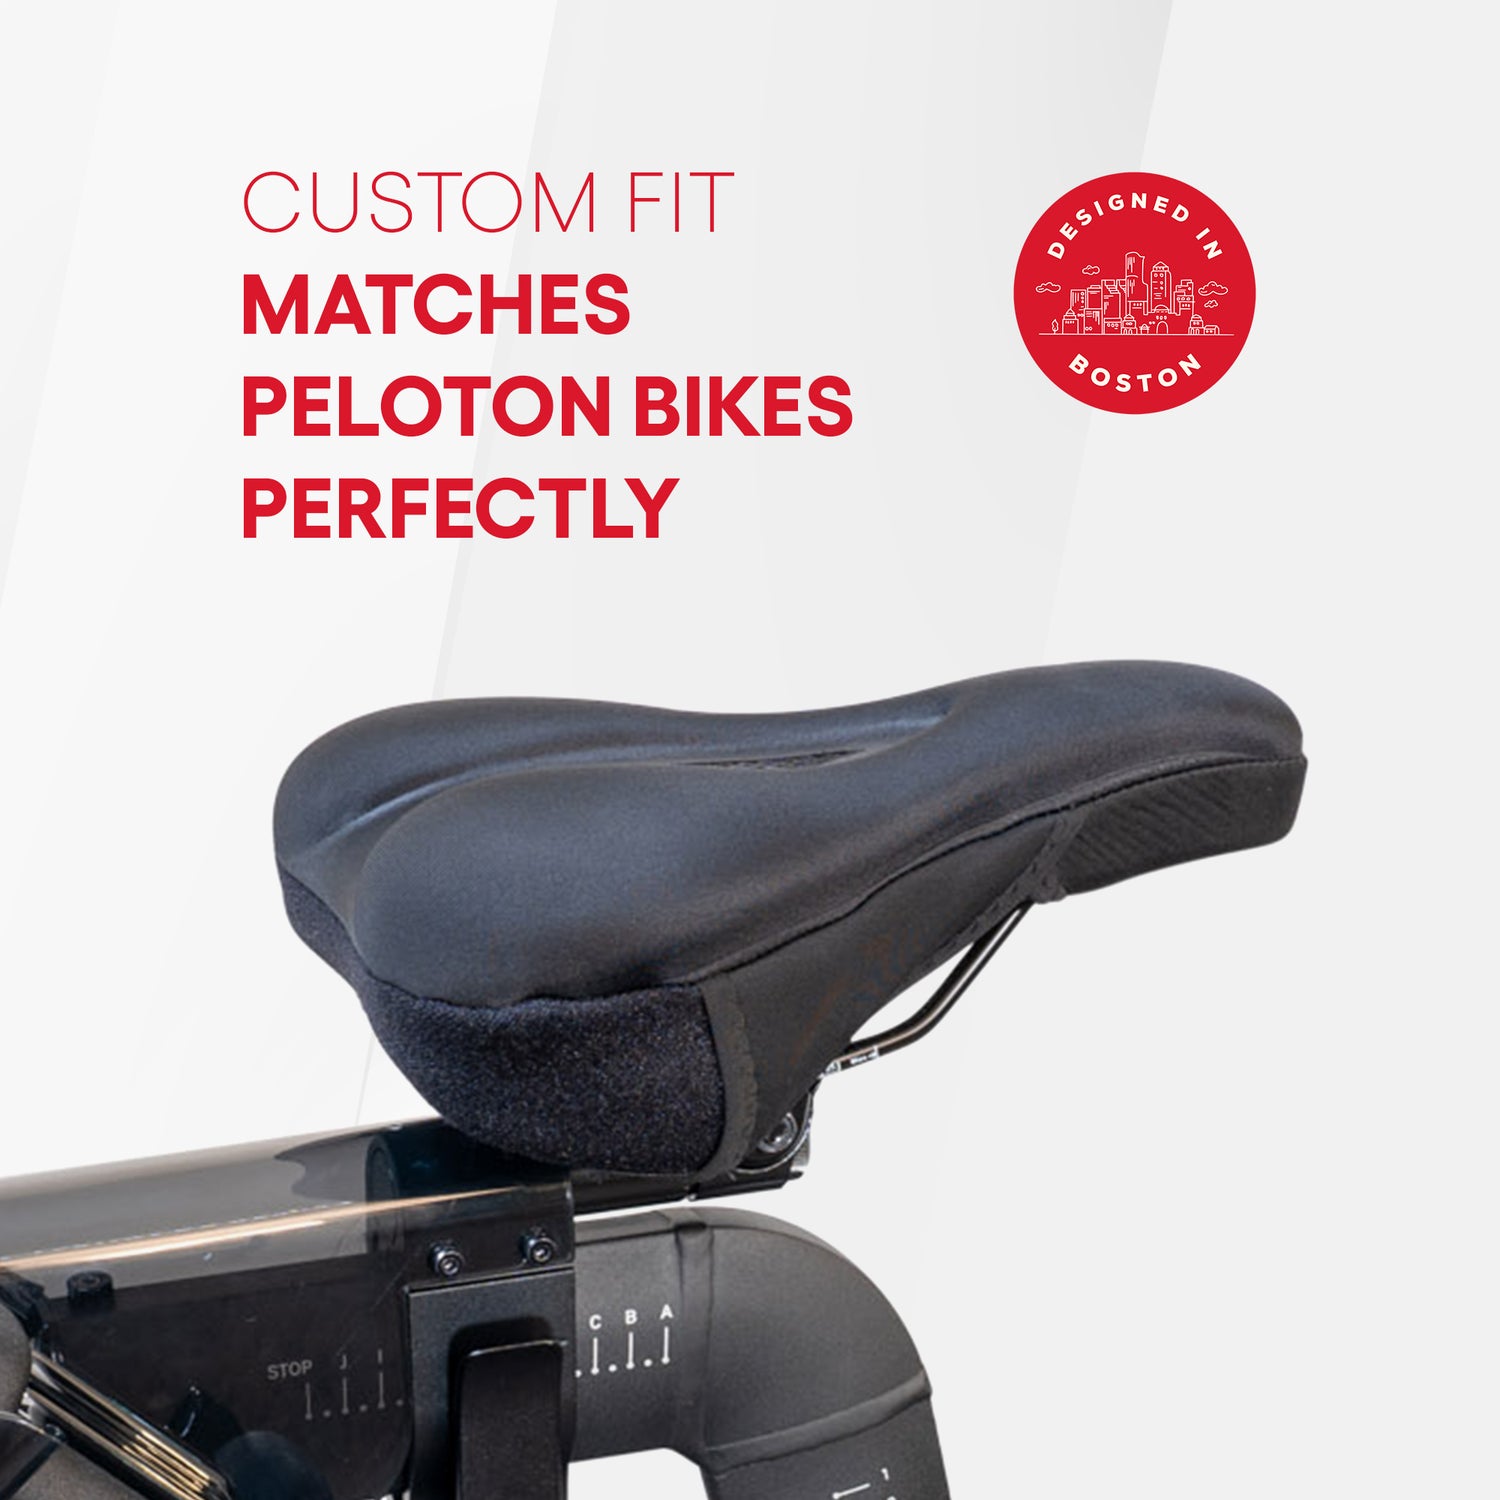 TrubliFit Padded Seat Cover for Peloton Bike & Bike+ - Gel Seat Cushion - Ultimate Comfort Saddle Cover for Men & Women, Black